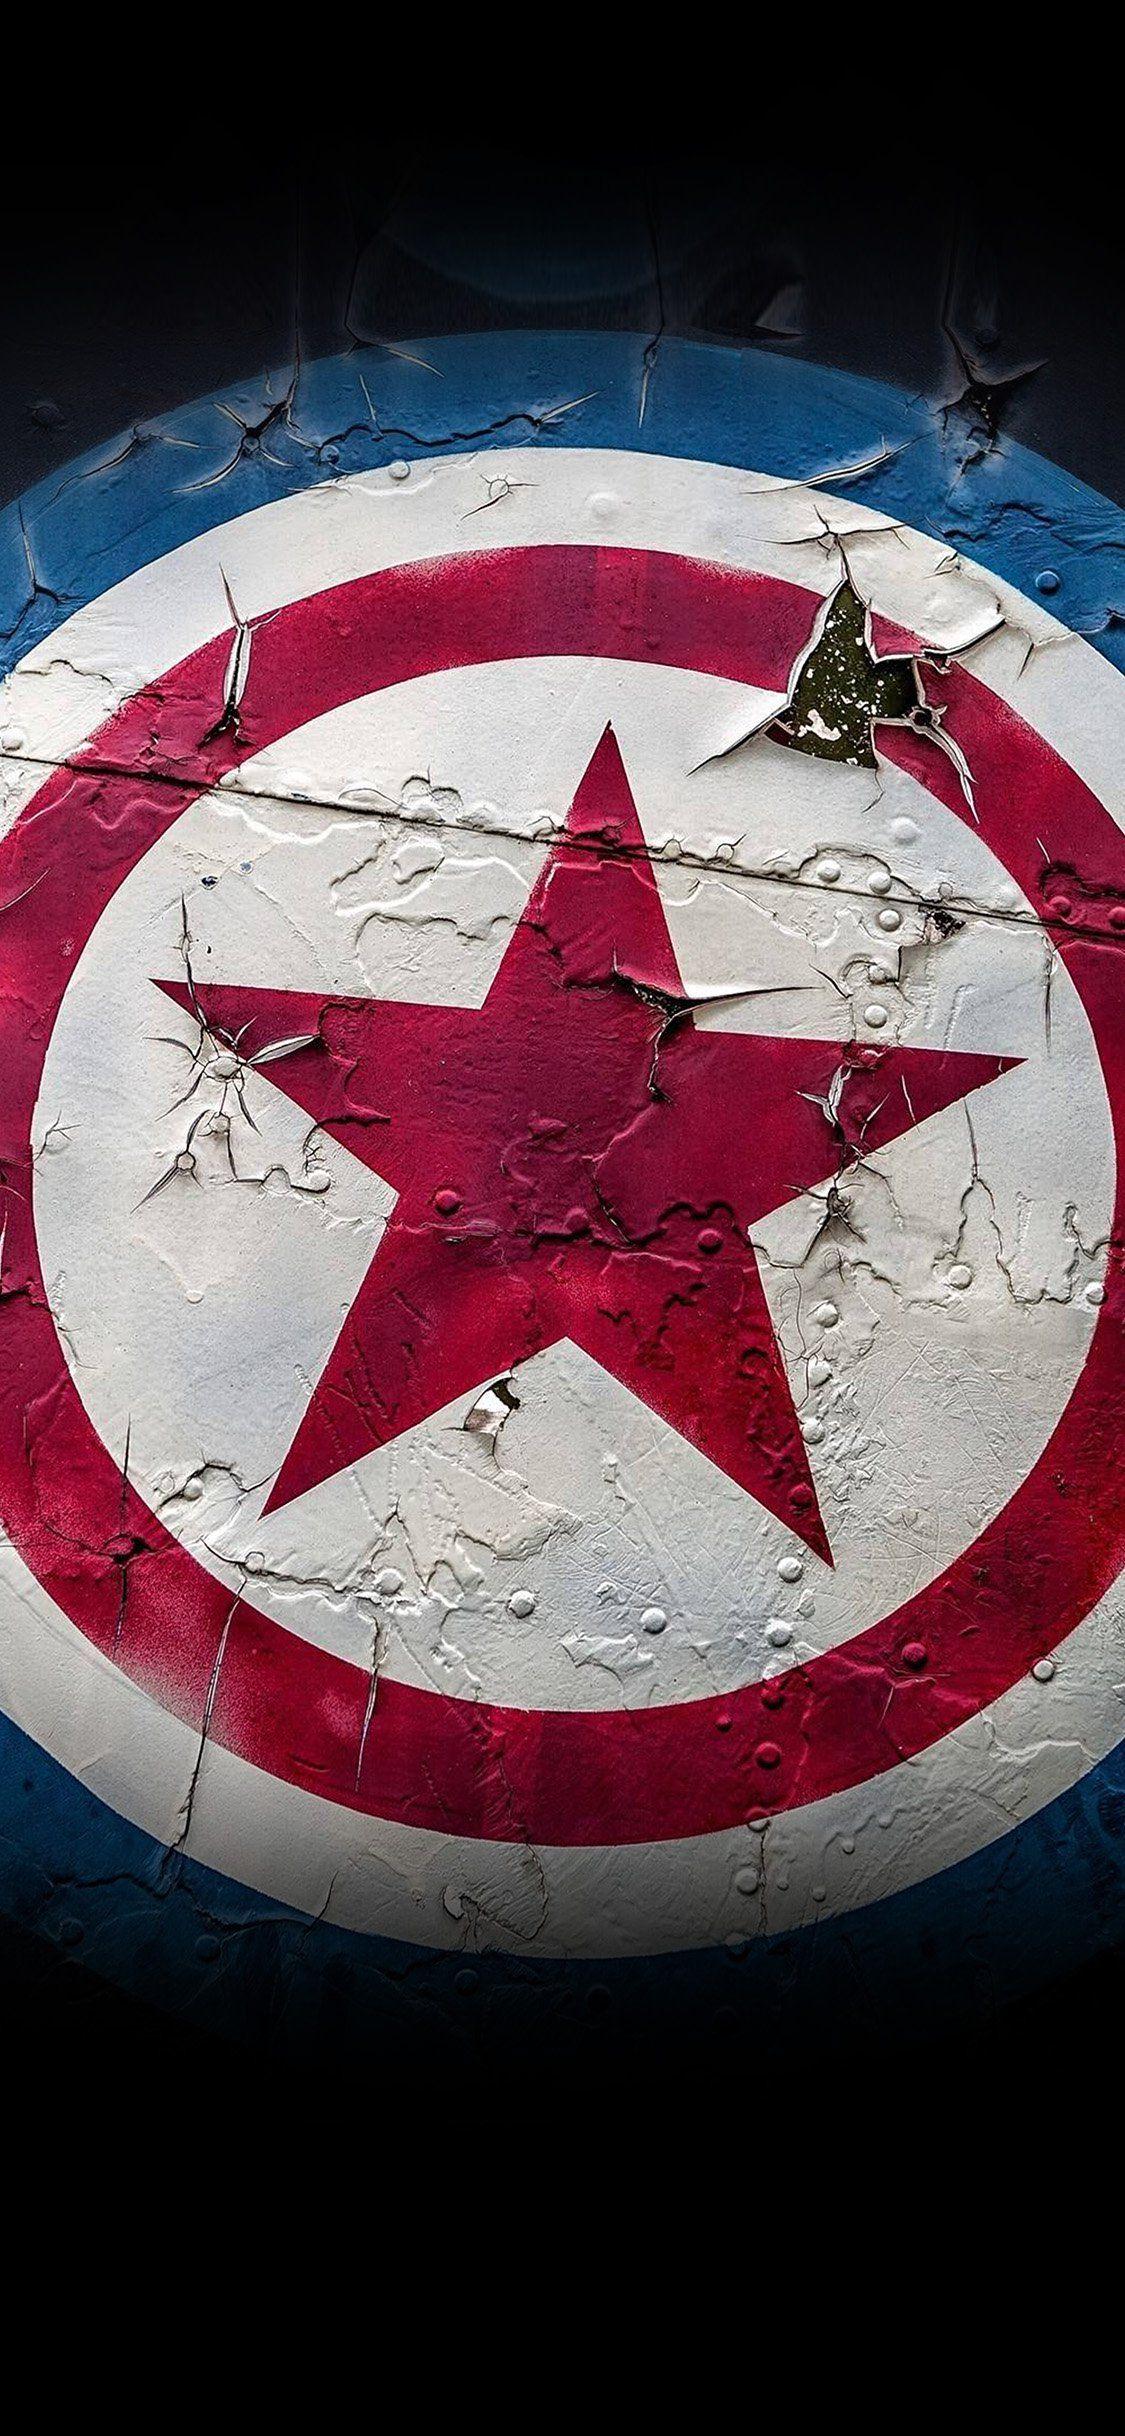 Captain America iPhone Wallpaper Free Captain America